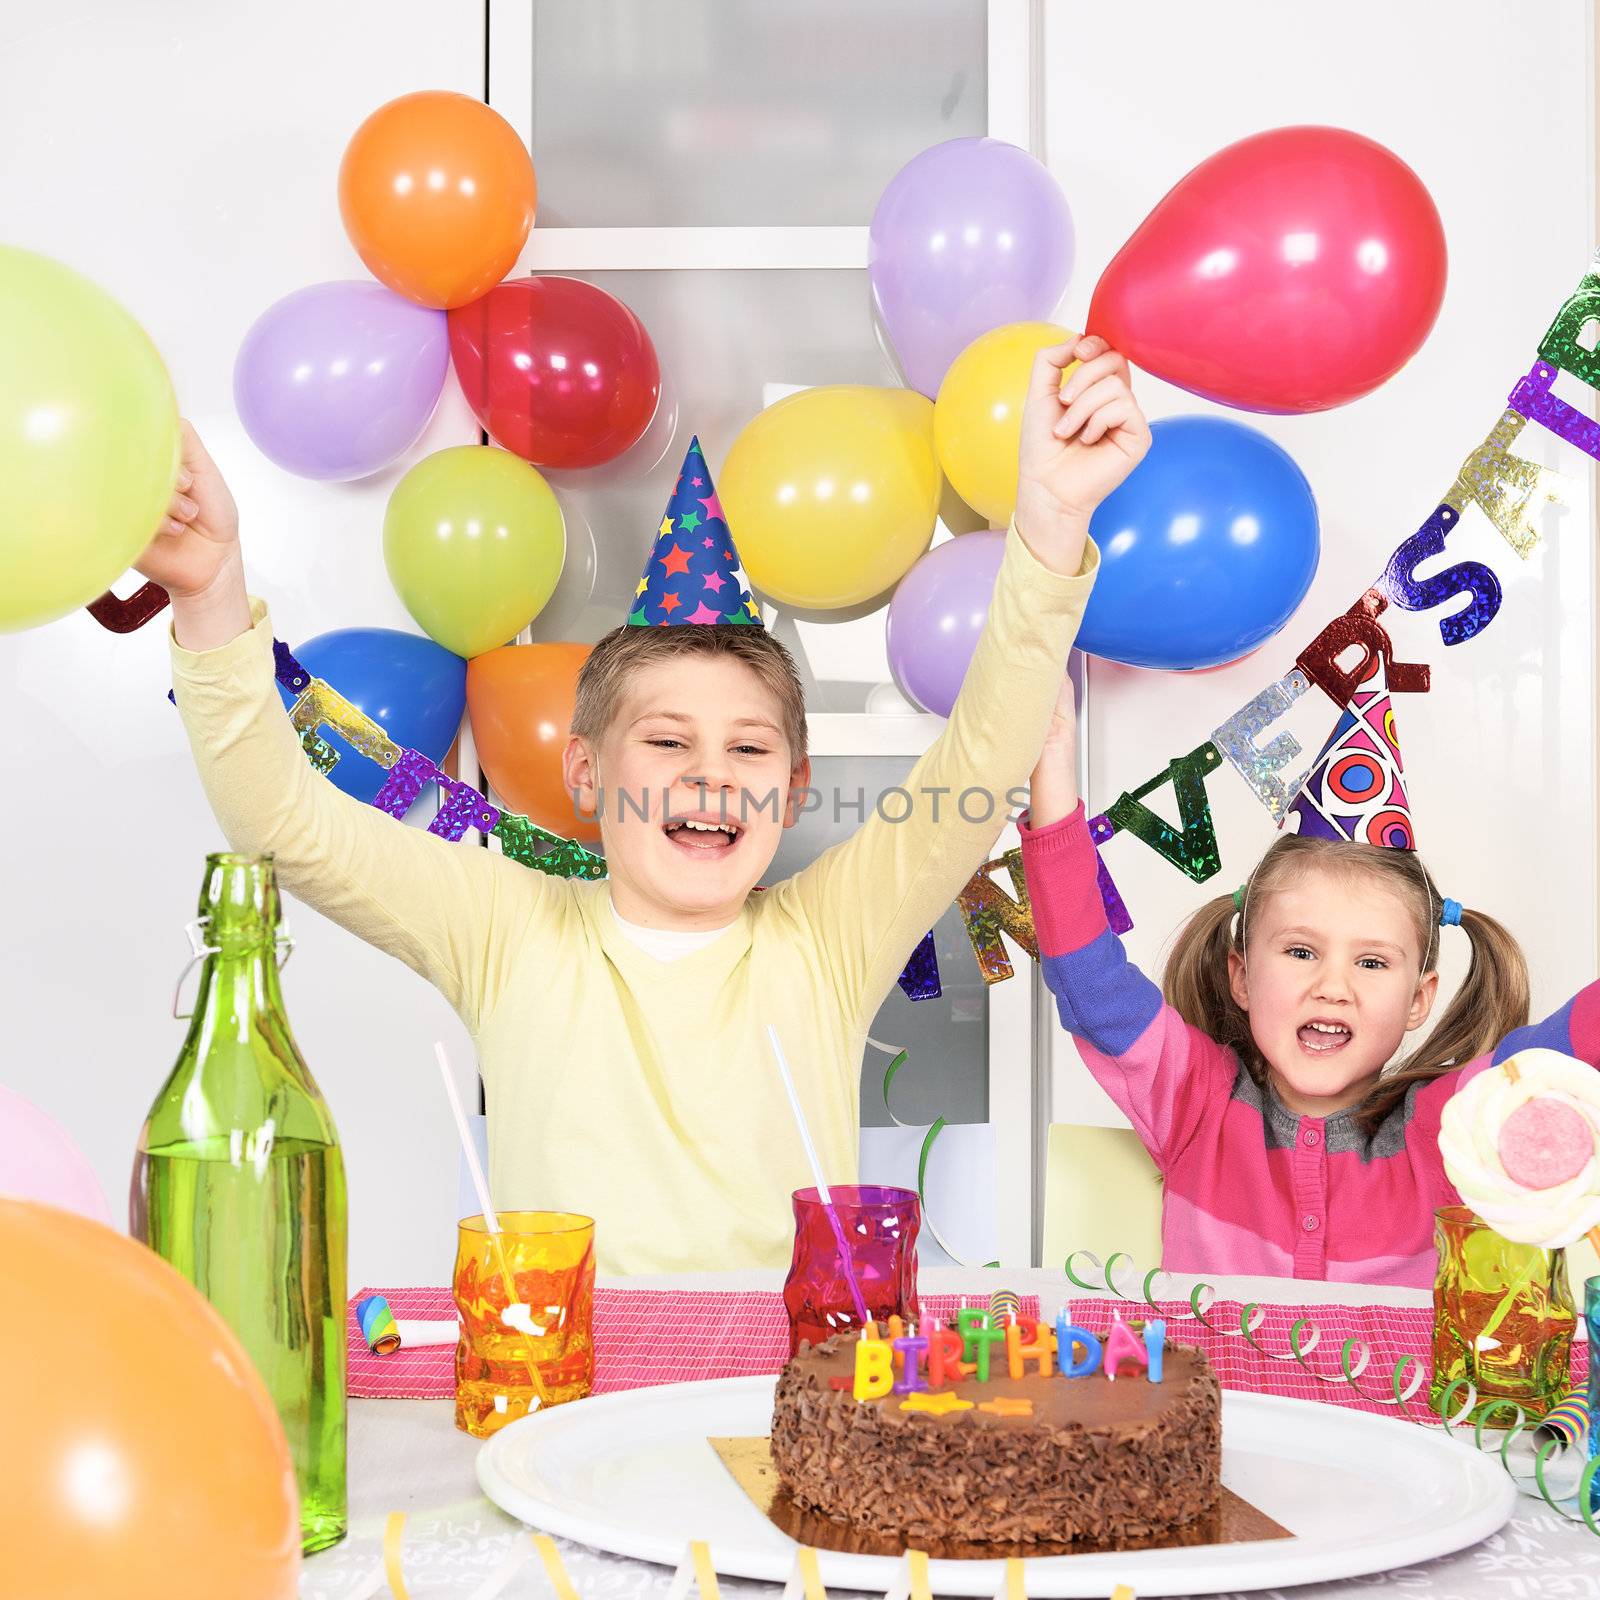 children at birthday by vwalakte